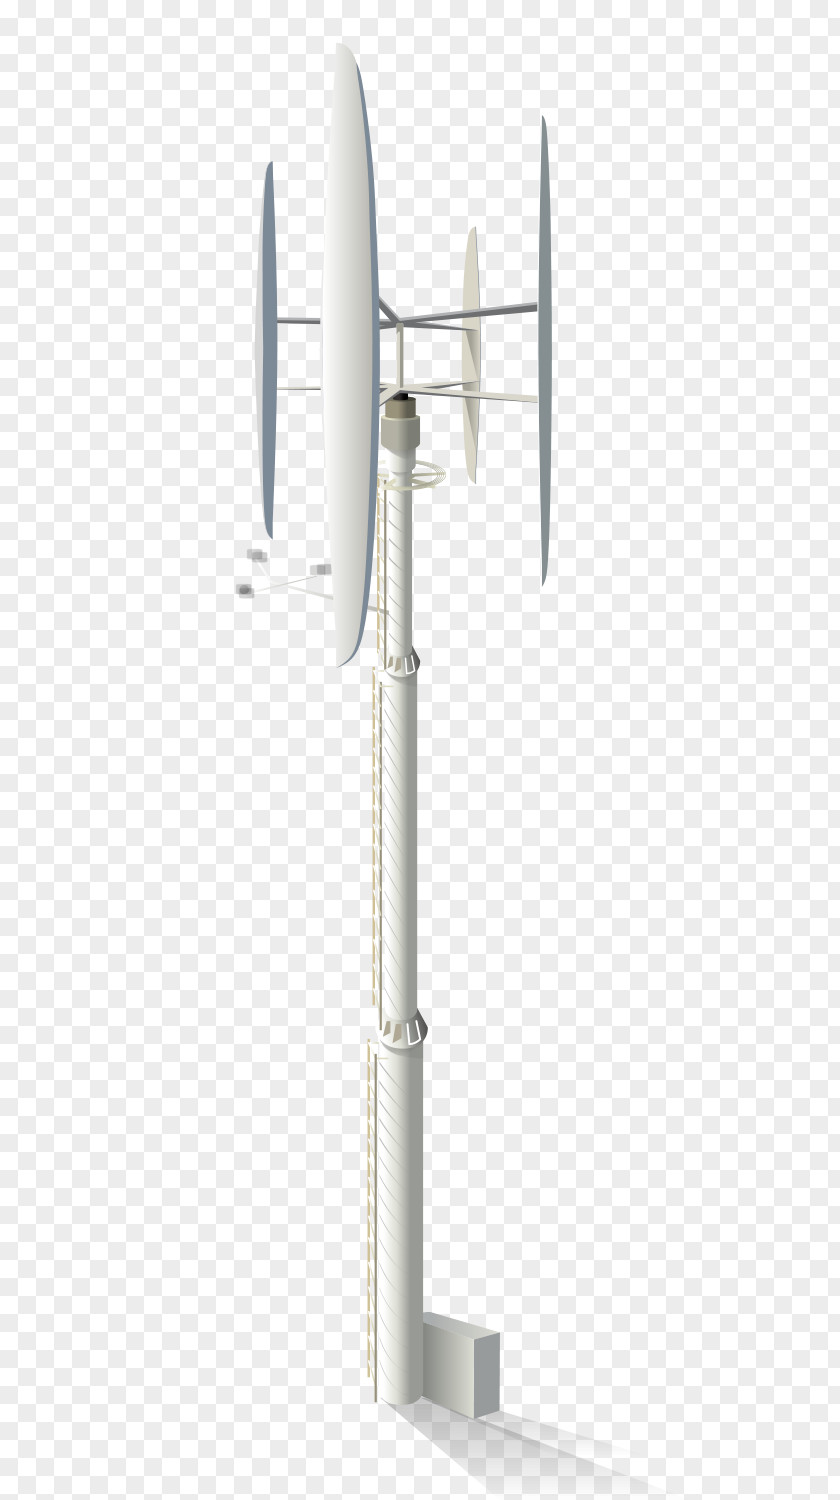 Windmill Home Wind Turbine Power Windgutachten Blade Pitch PNG